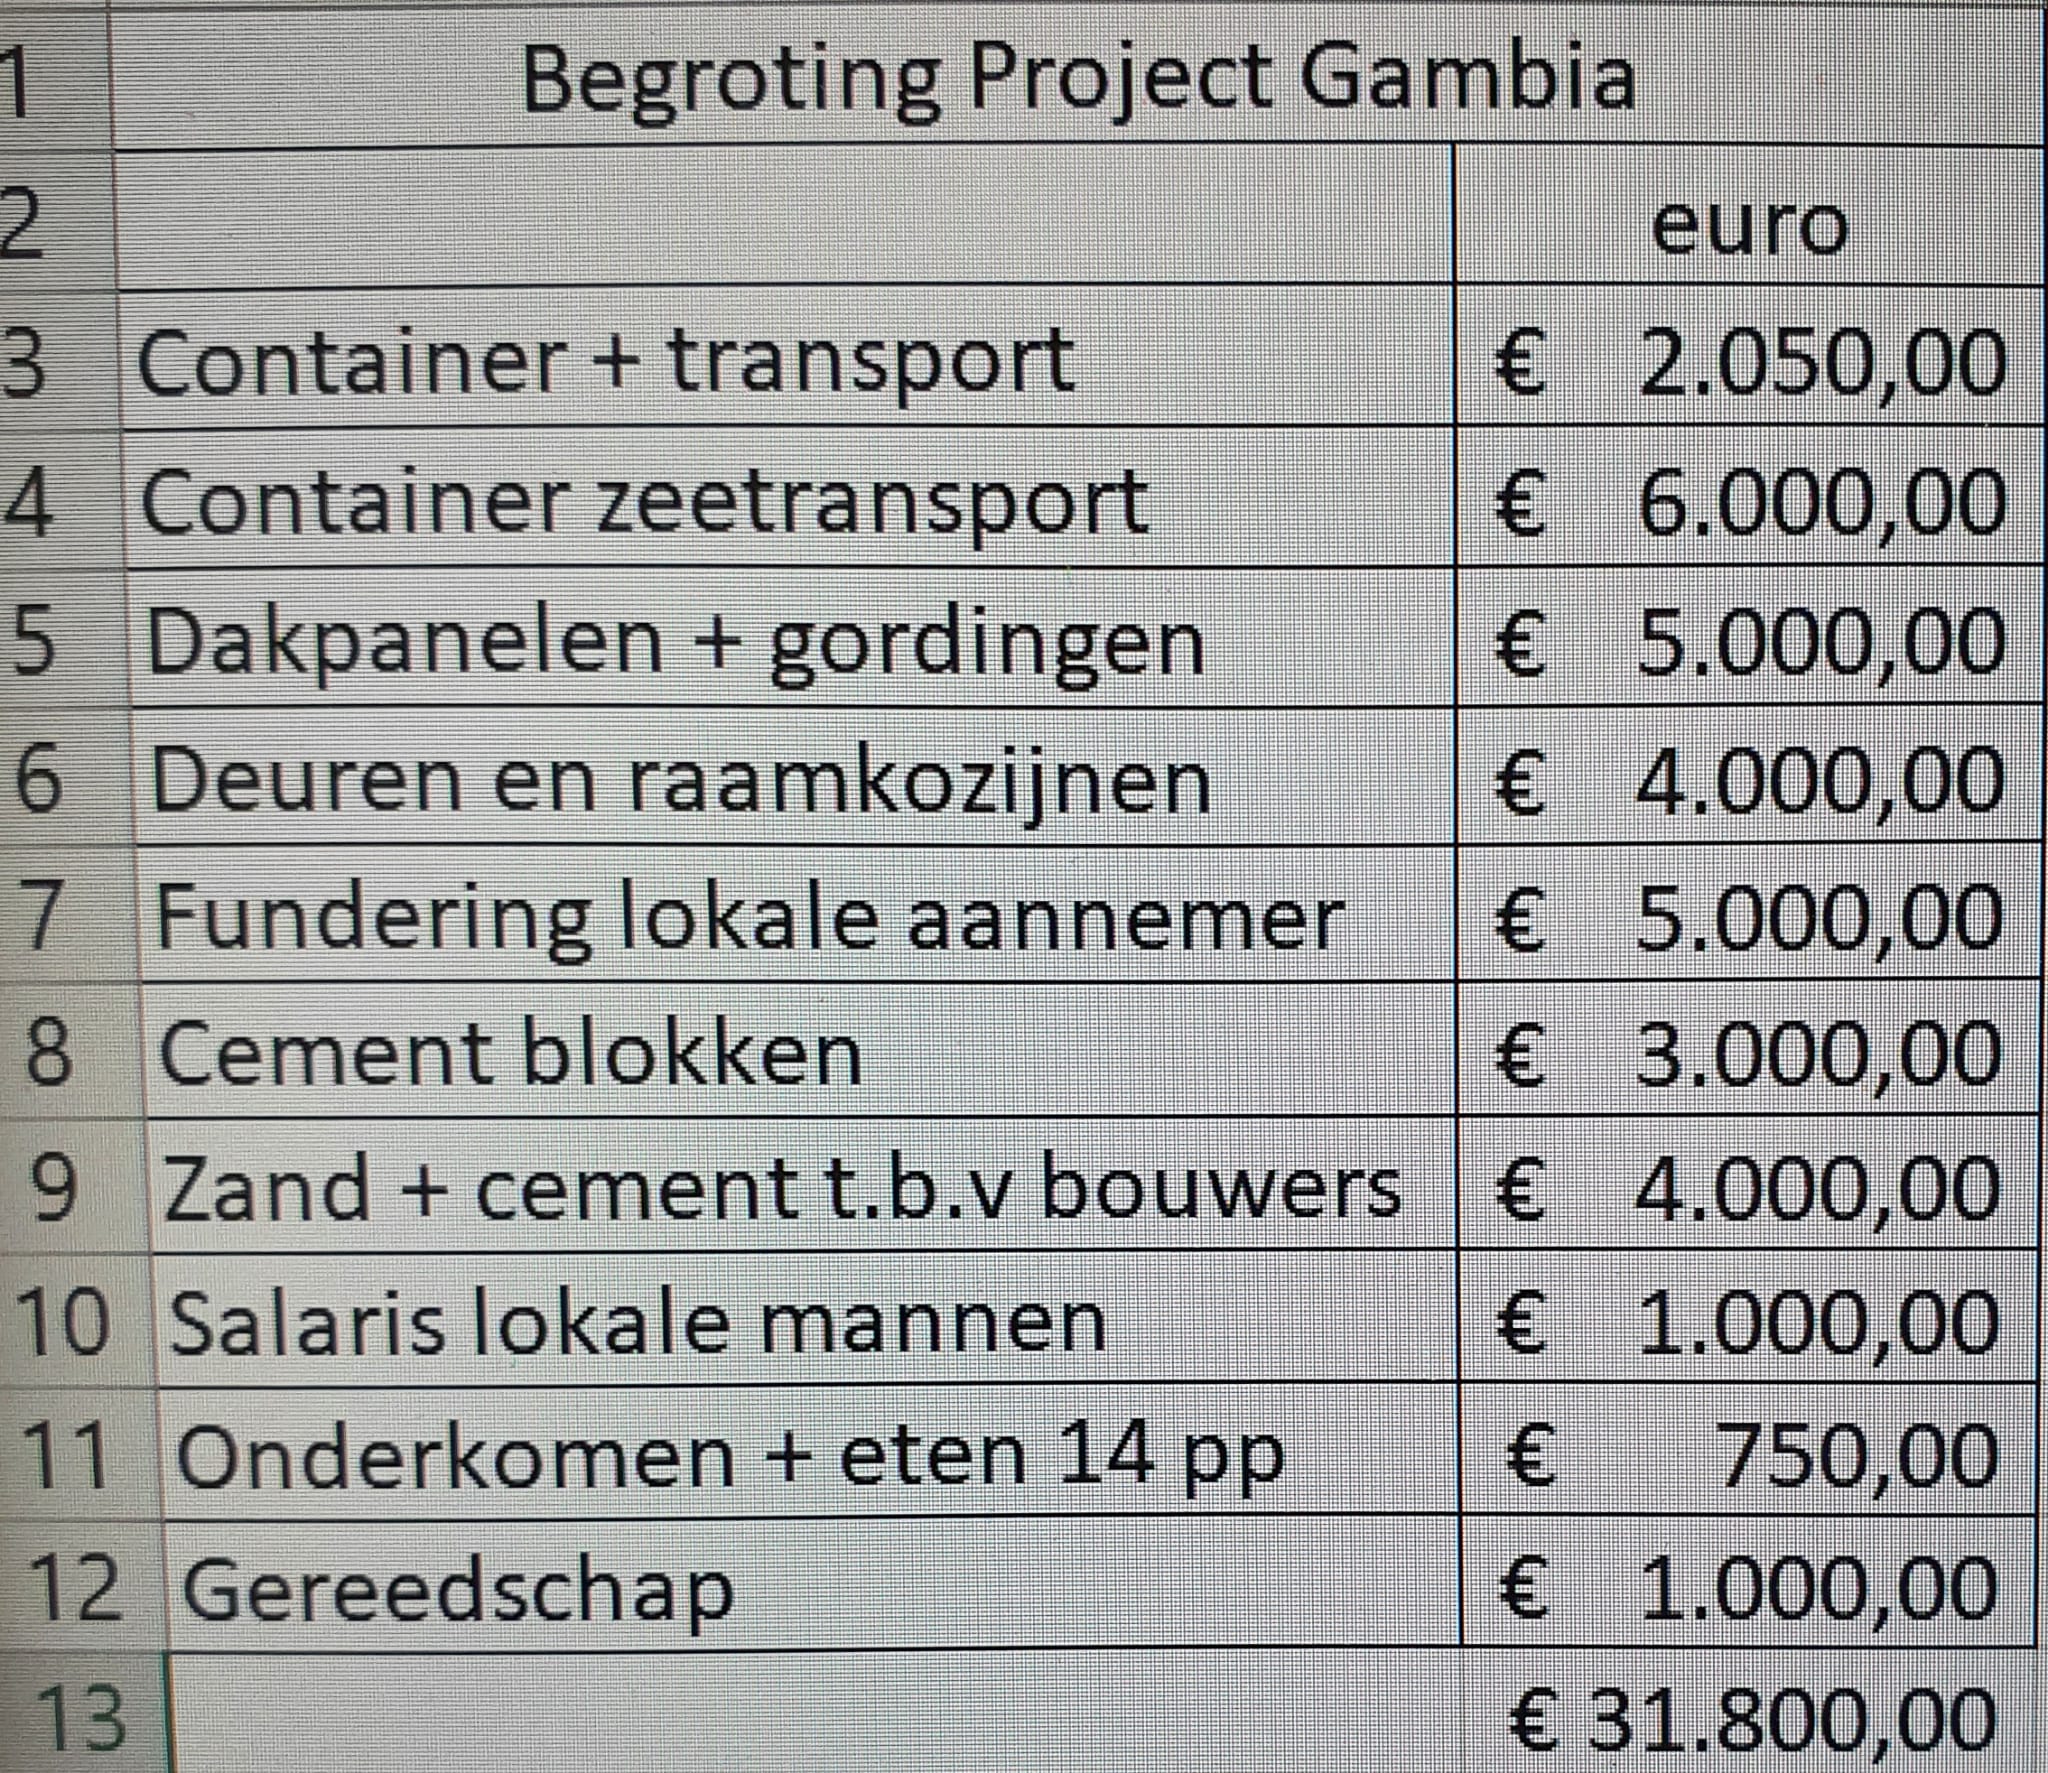 Begroting project Gambia